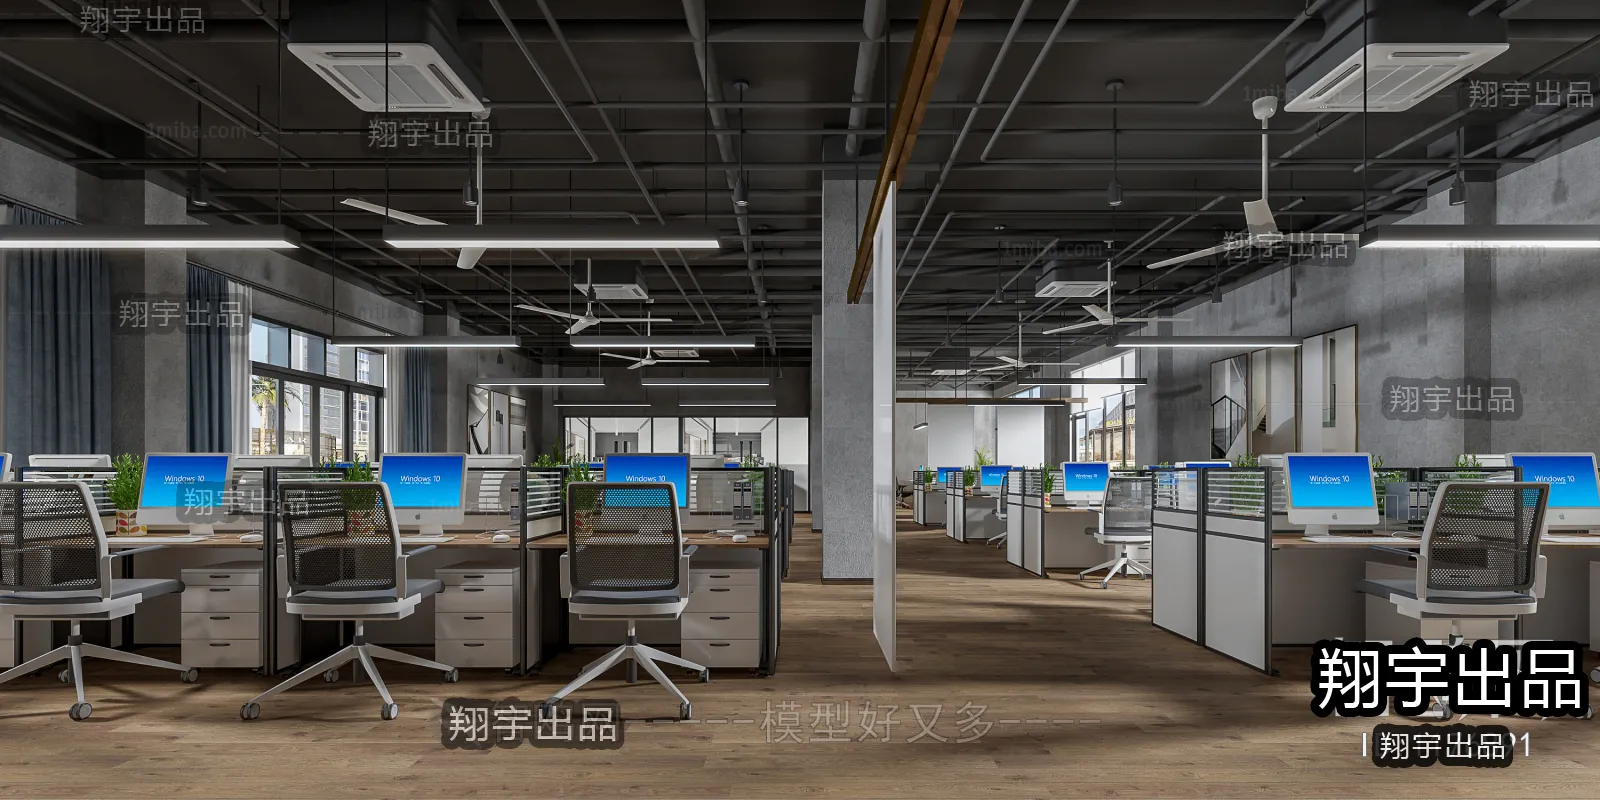 3D OFFICE INTERIOR (VRAY) – WORKSPACE 3D SCENES – 034